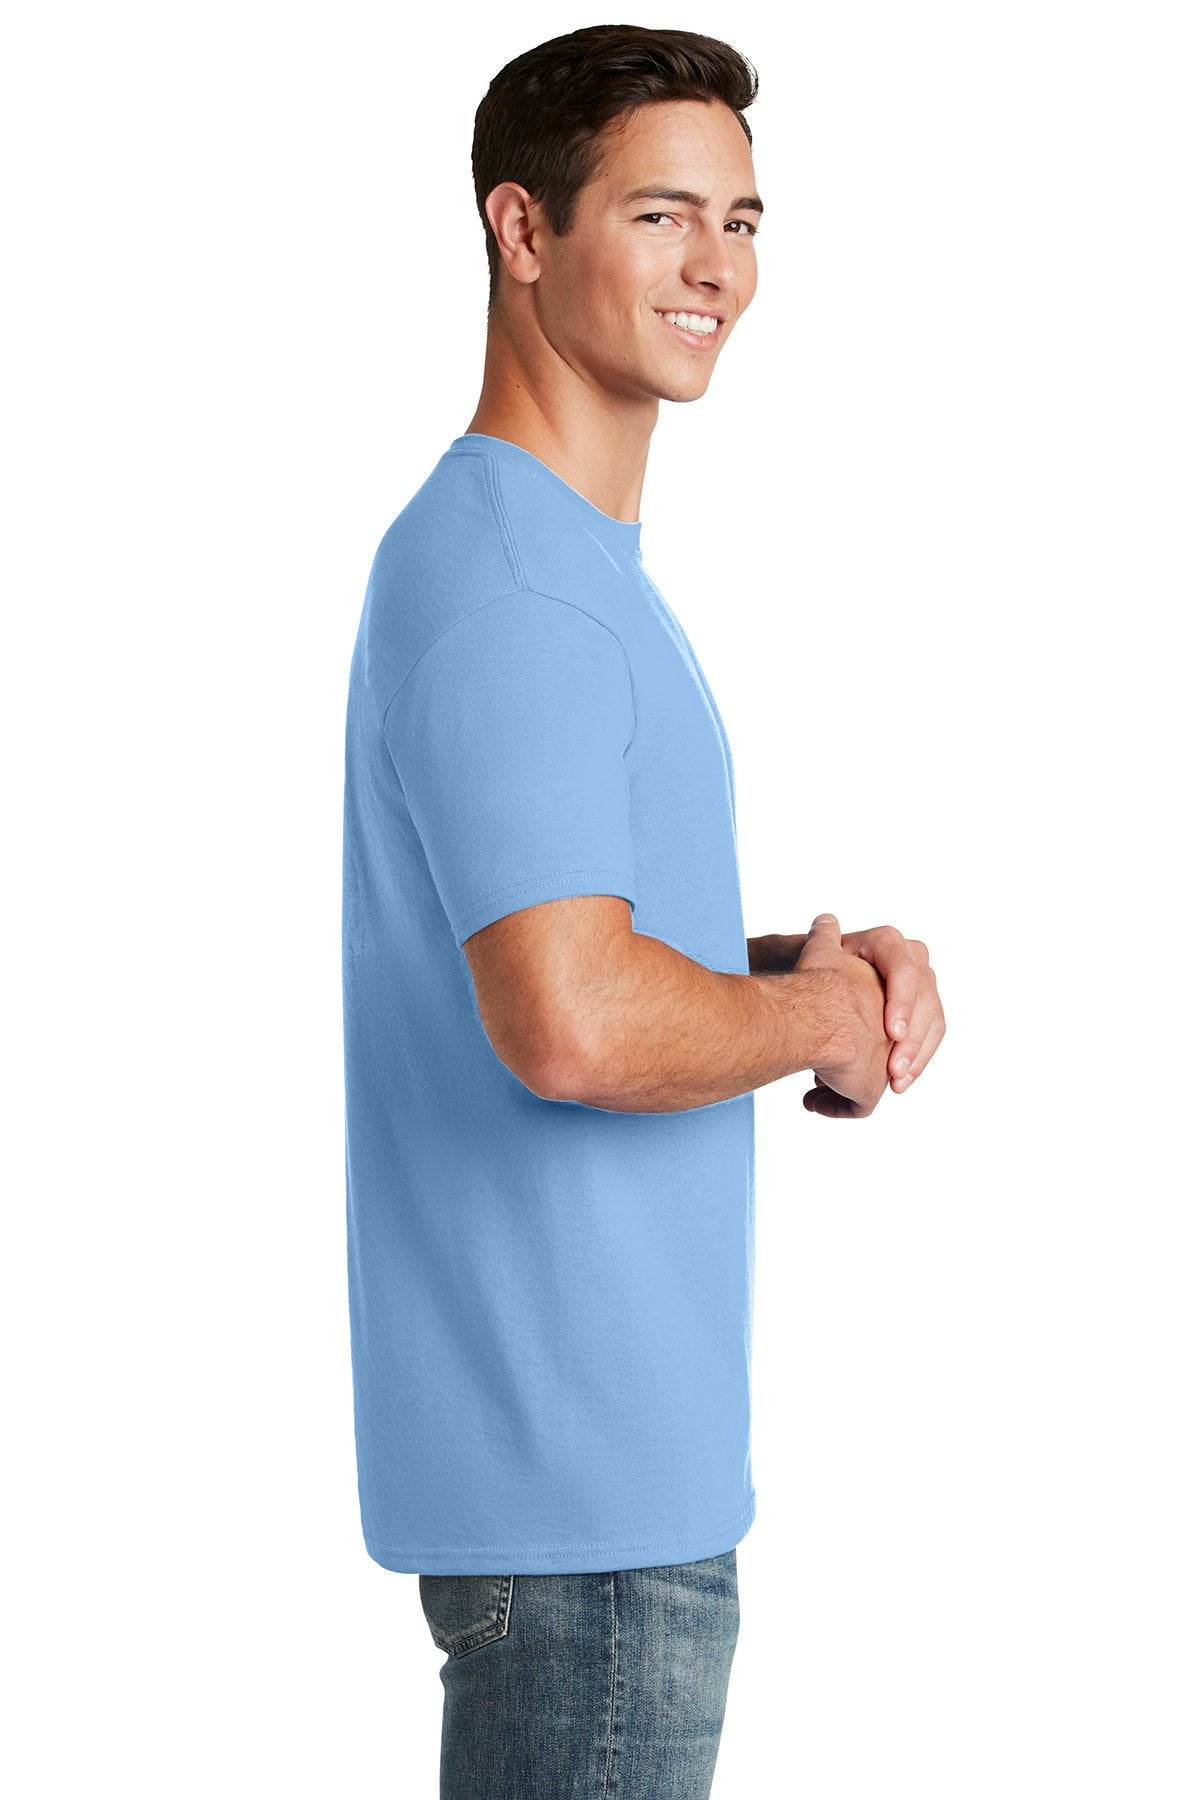 Jerzees Dri-Power Active 50/50 Cotton/Poly T-Shirt 29M Light Blue